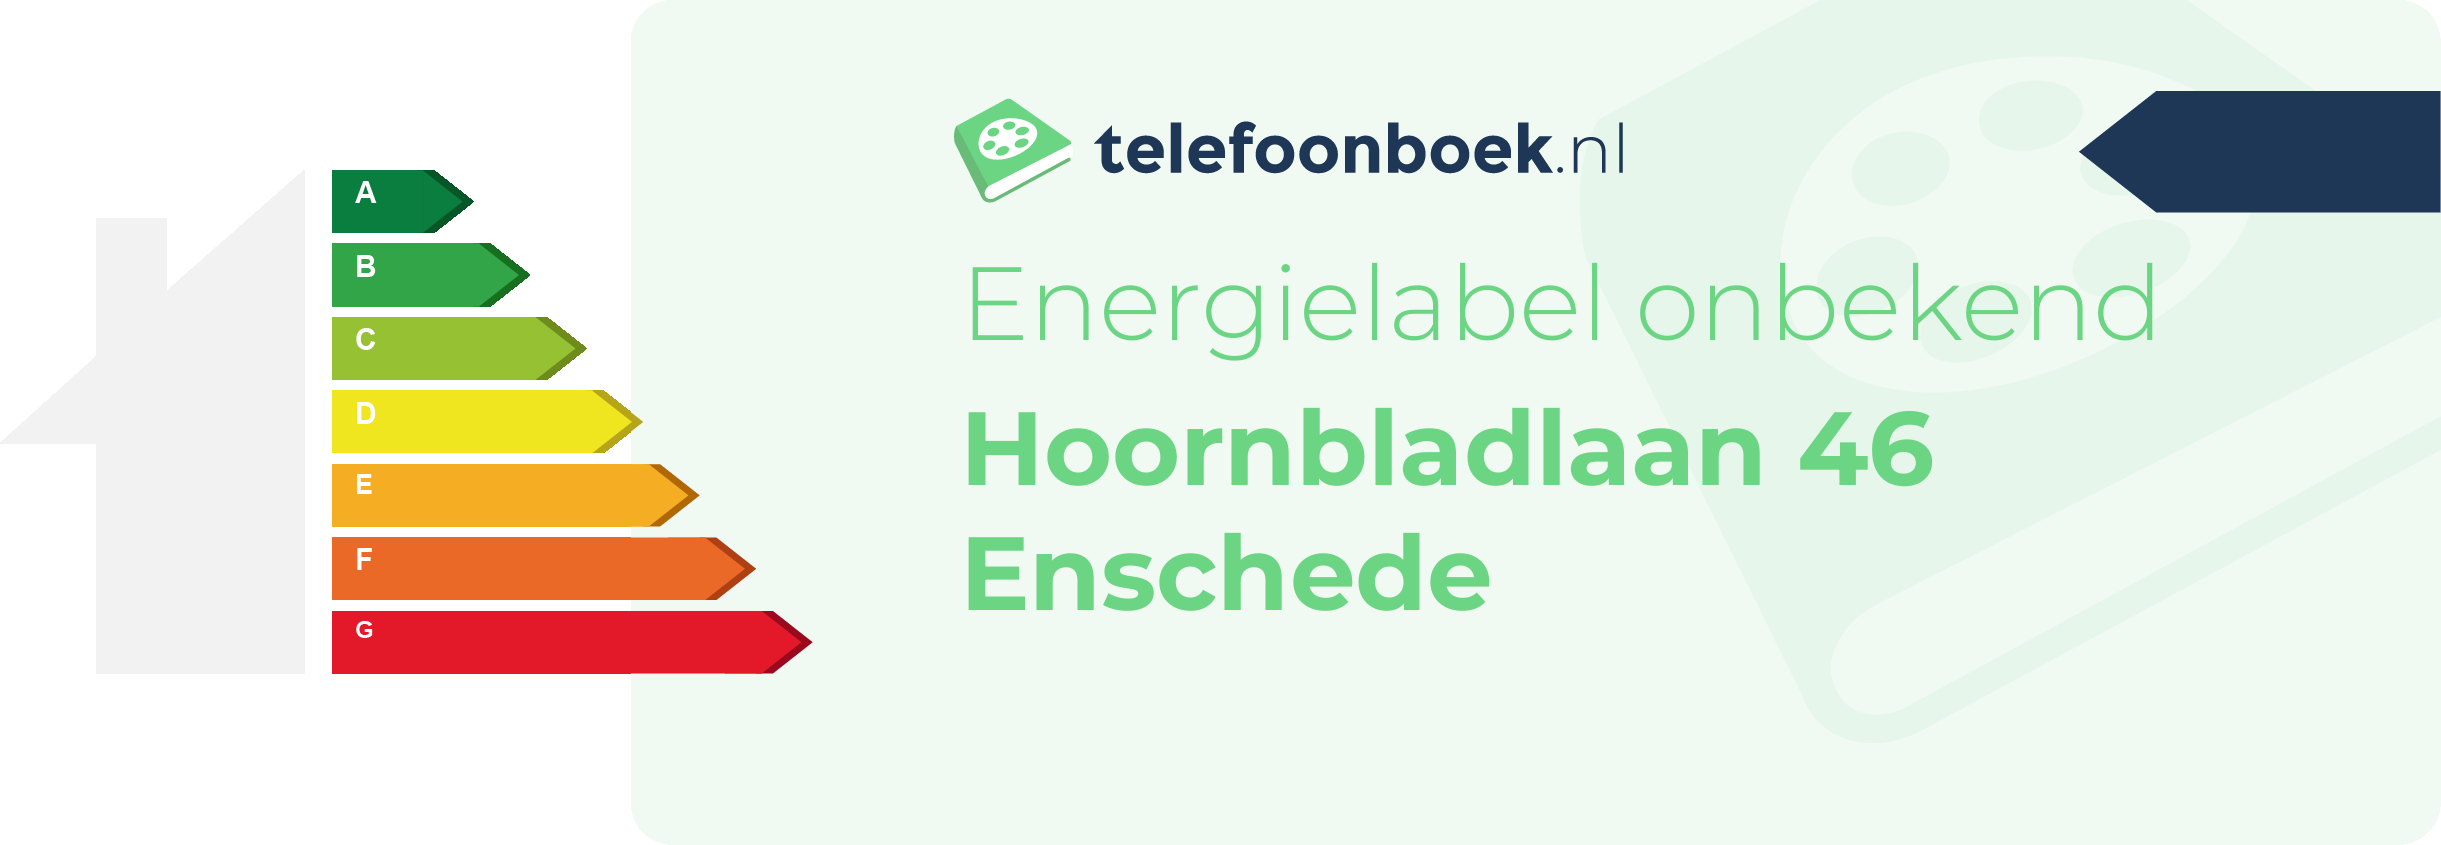 Energielabel Hoornbladlaan 46 Enschede